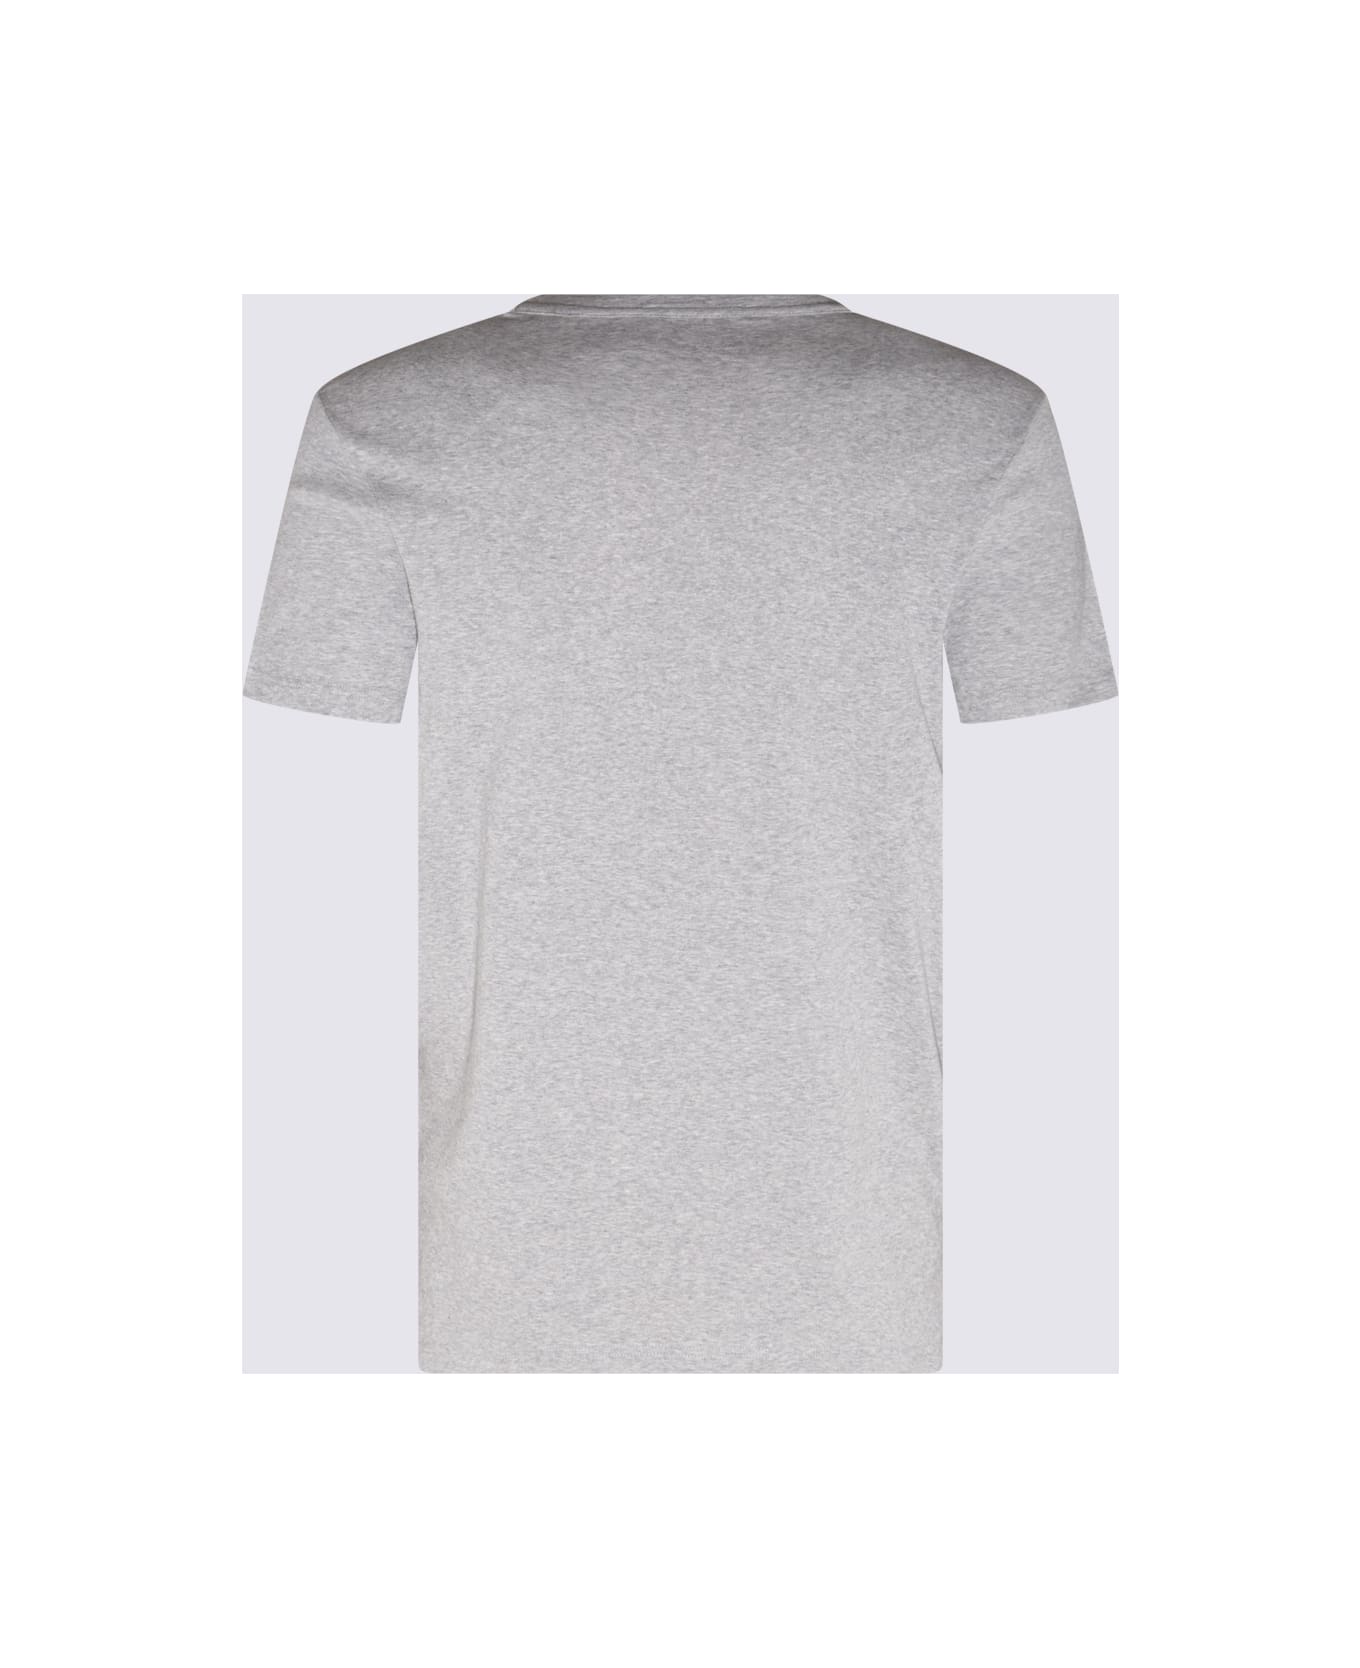 Tom Ford Grey Cotton Blend T-shirt - Grey